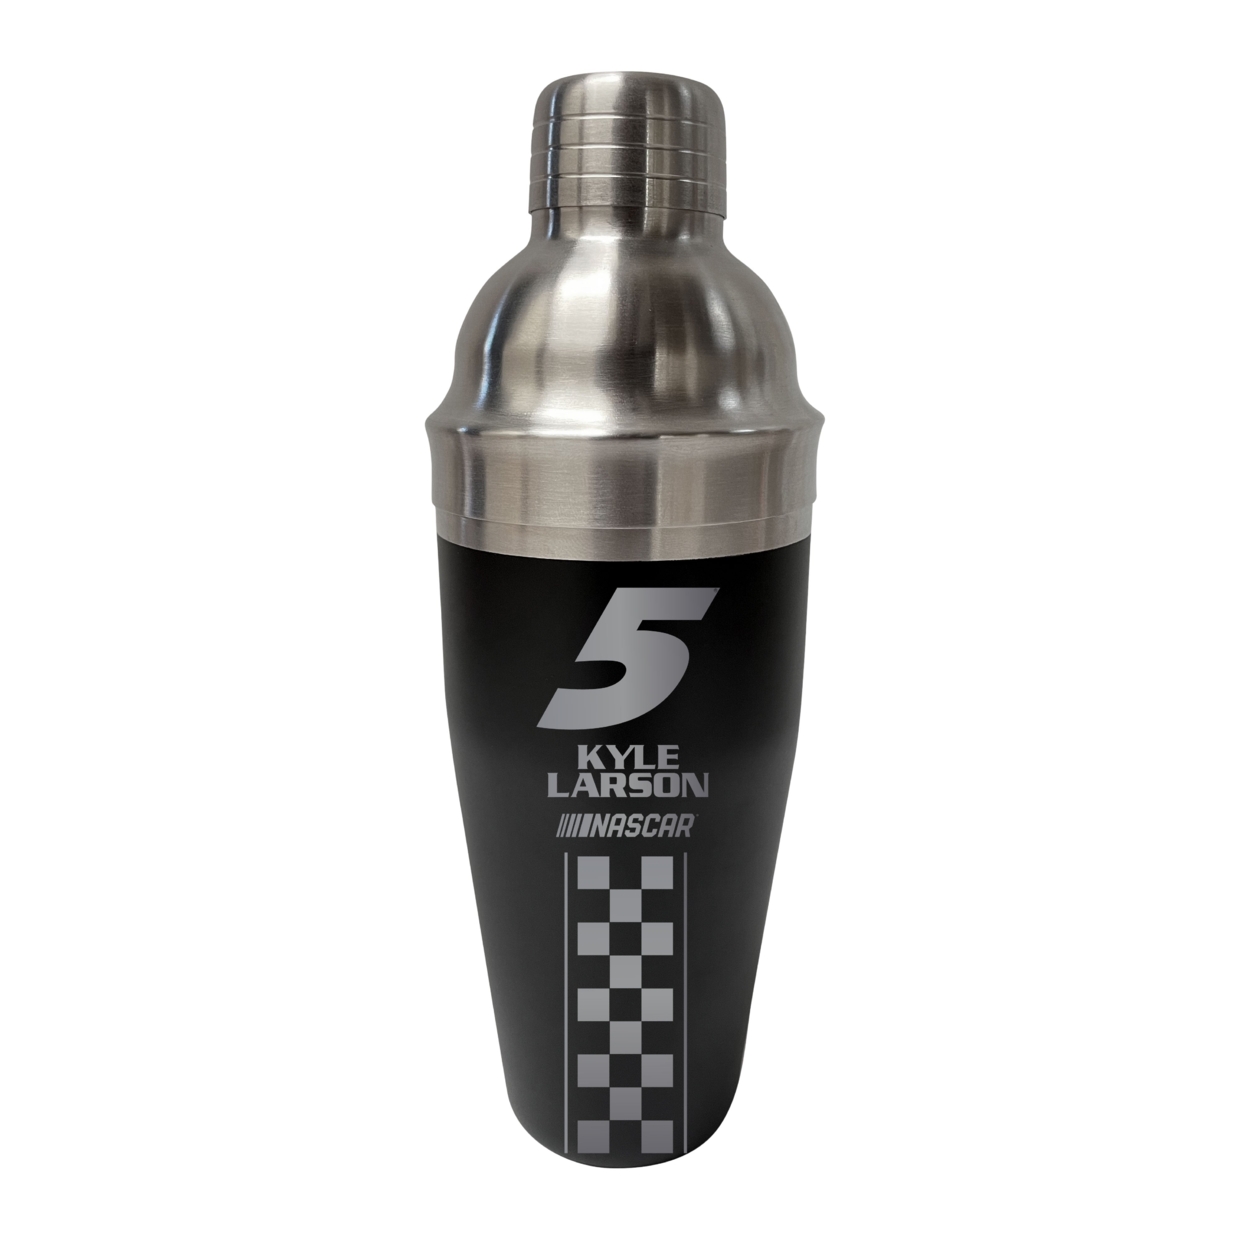 #5 Kyle Larson NASCAR Officially Licensed Cocktail Shaker